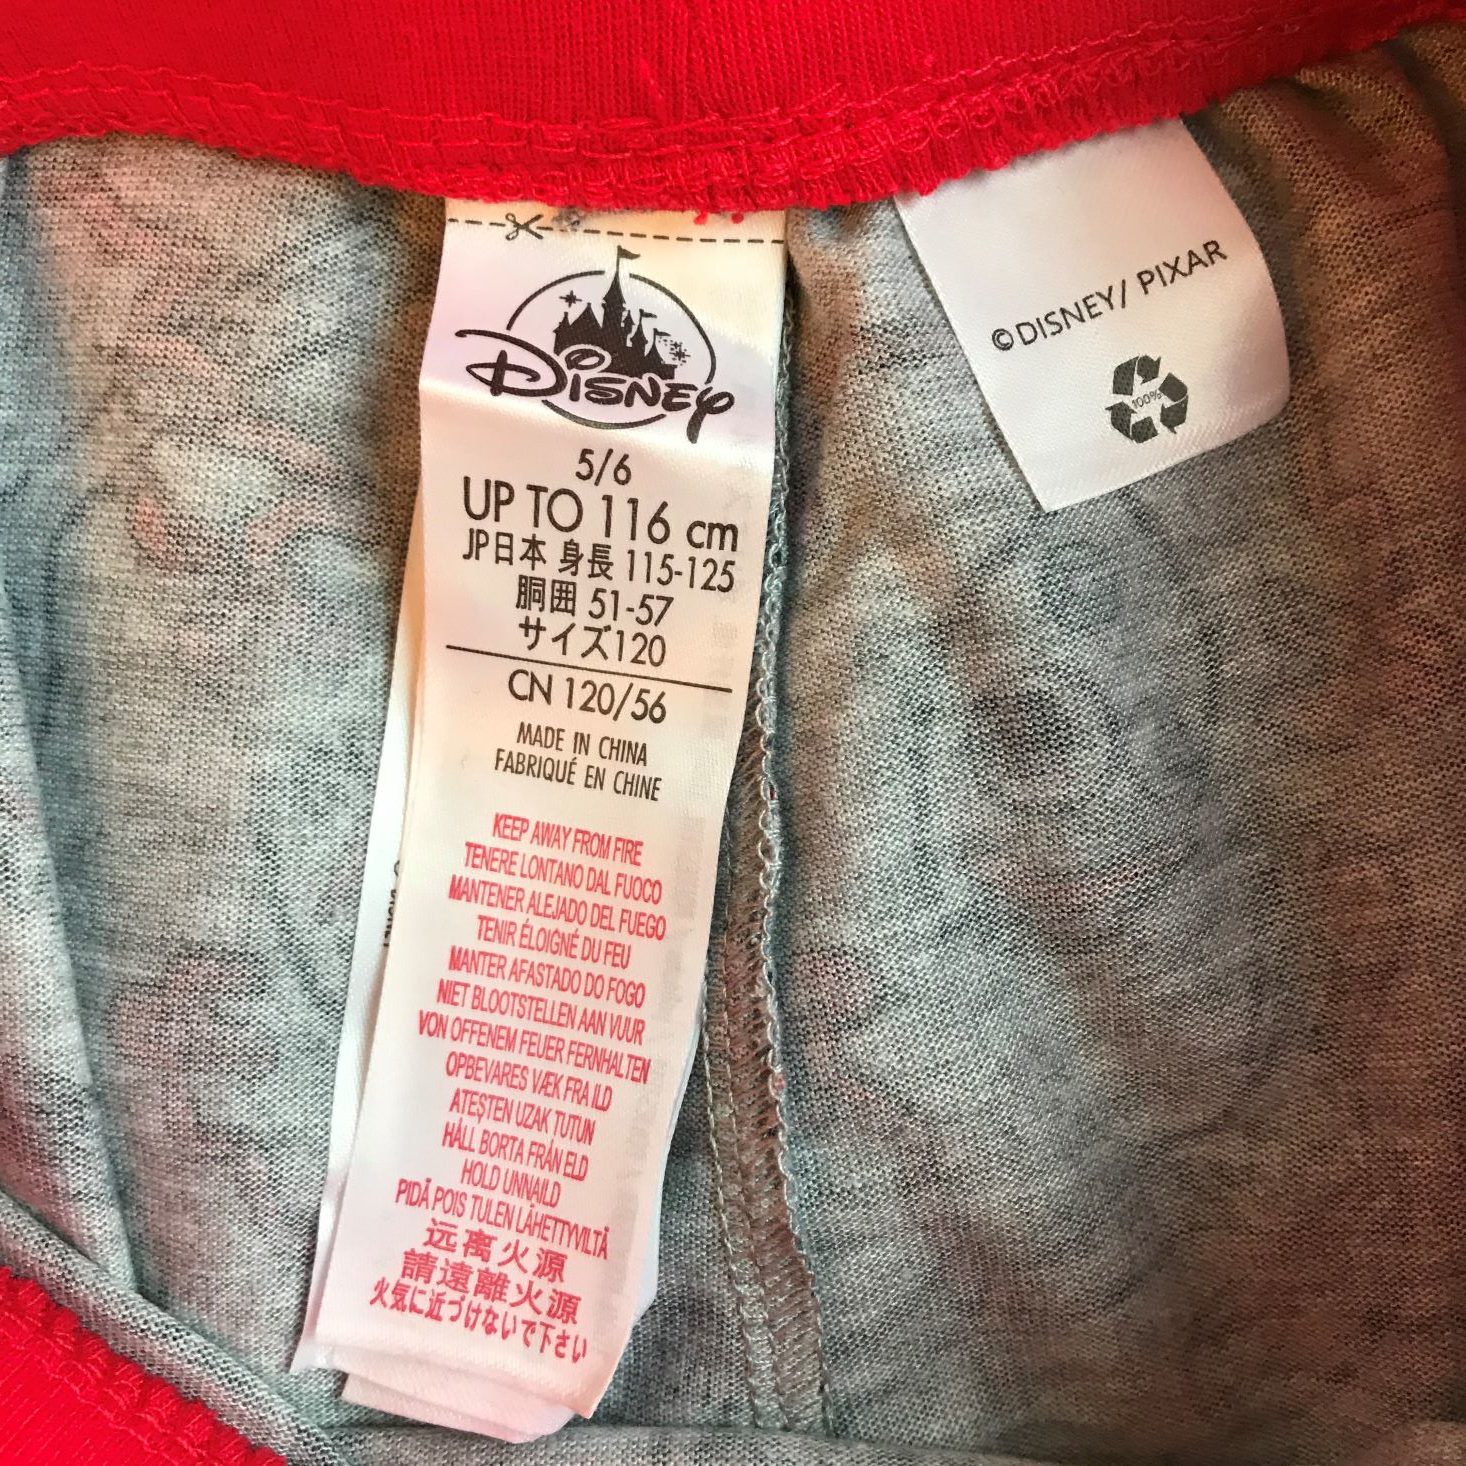 Disney Bedtime Adventure Box October 2019 pants tag